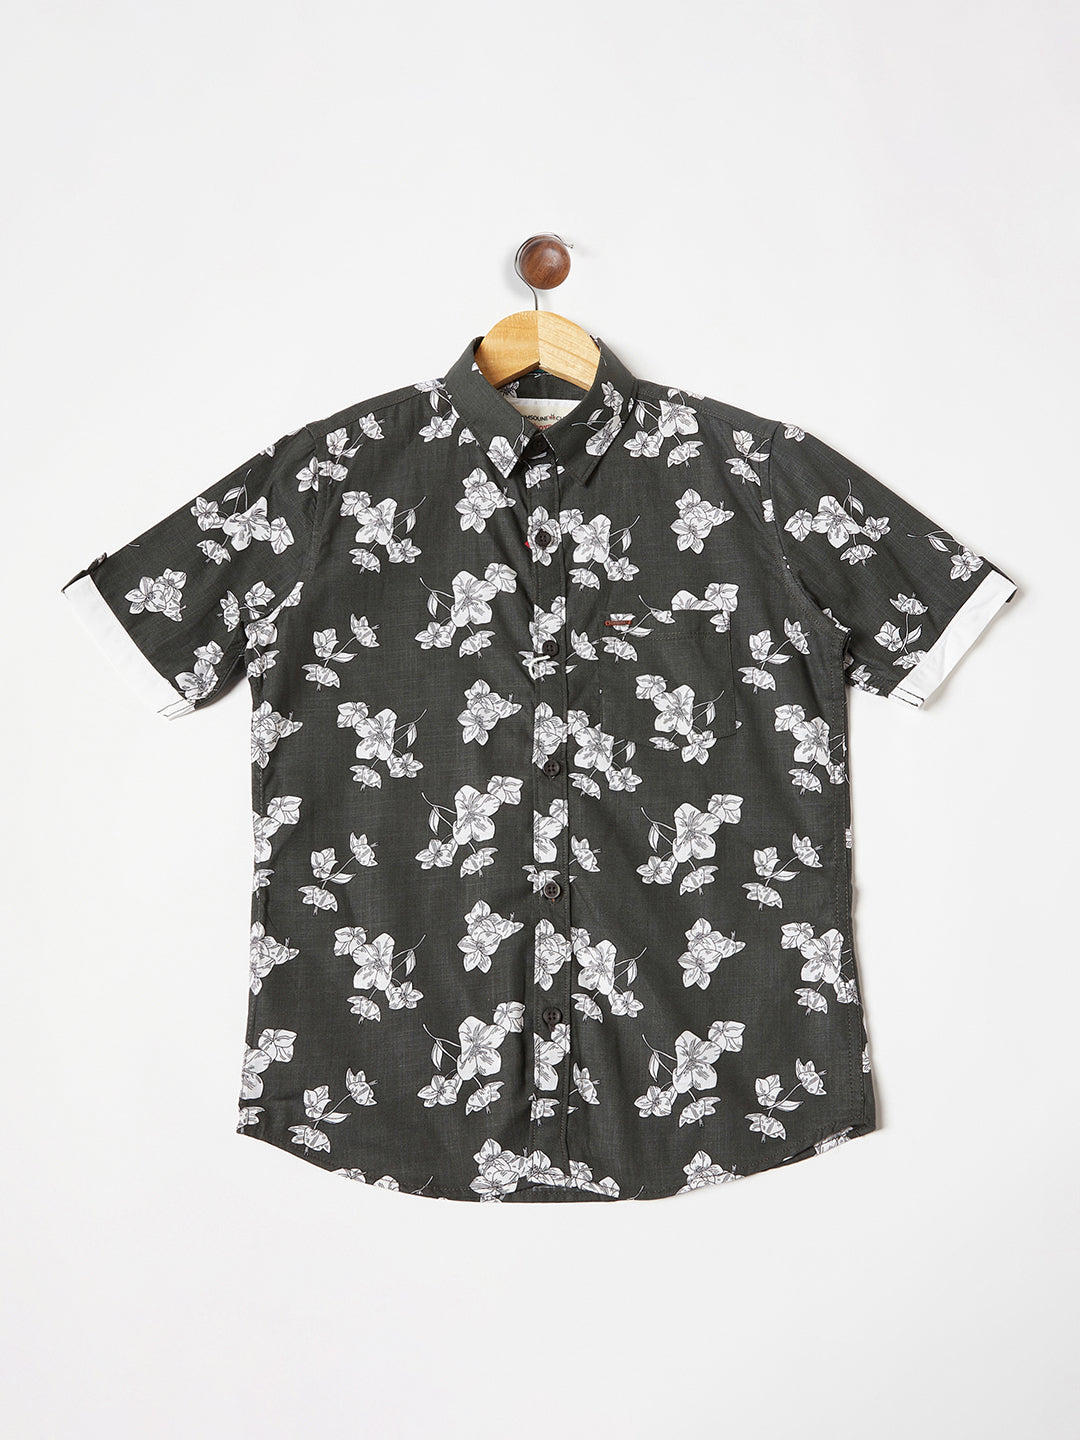 Olive Floral Shirt - Boys Shirts